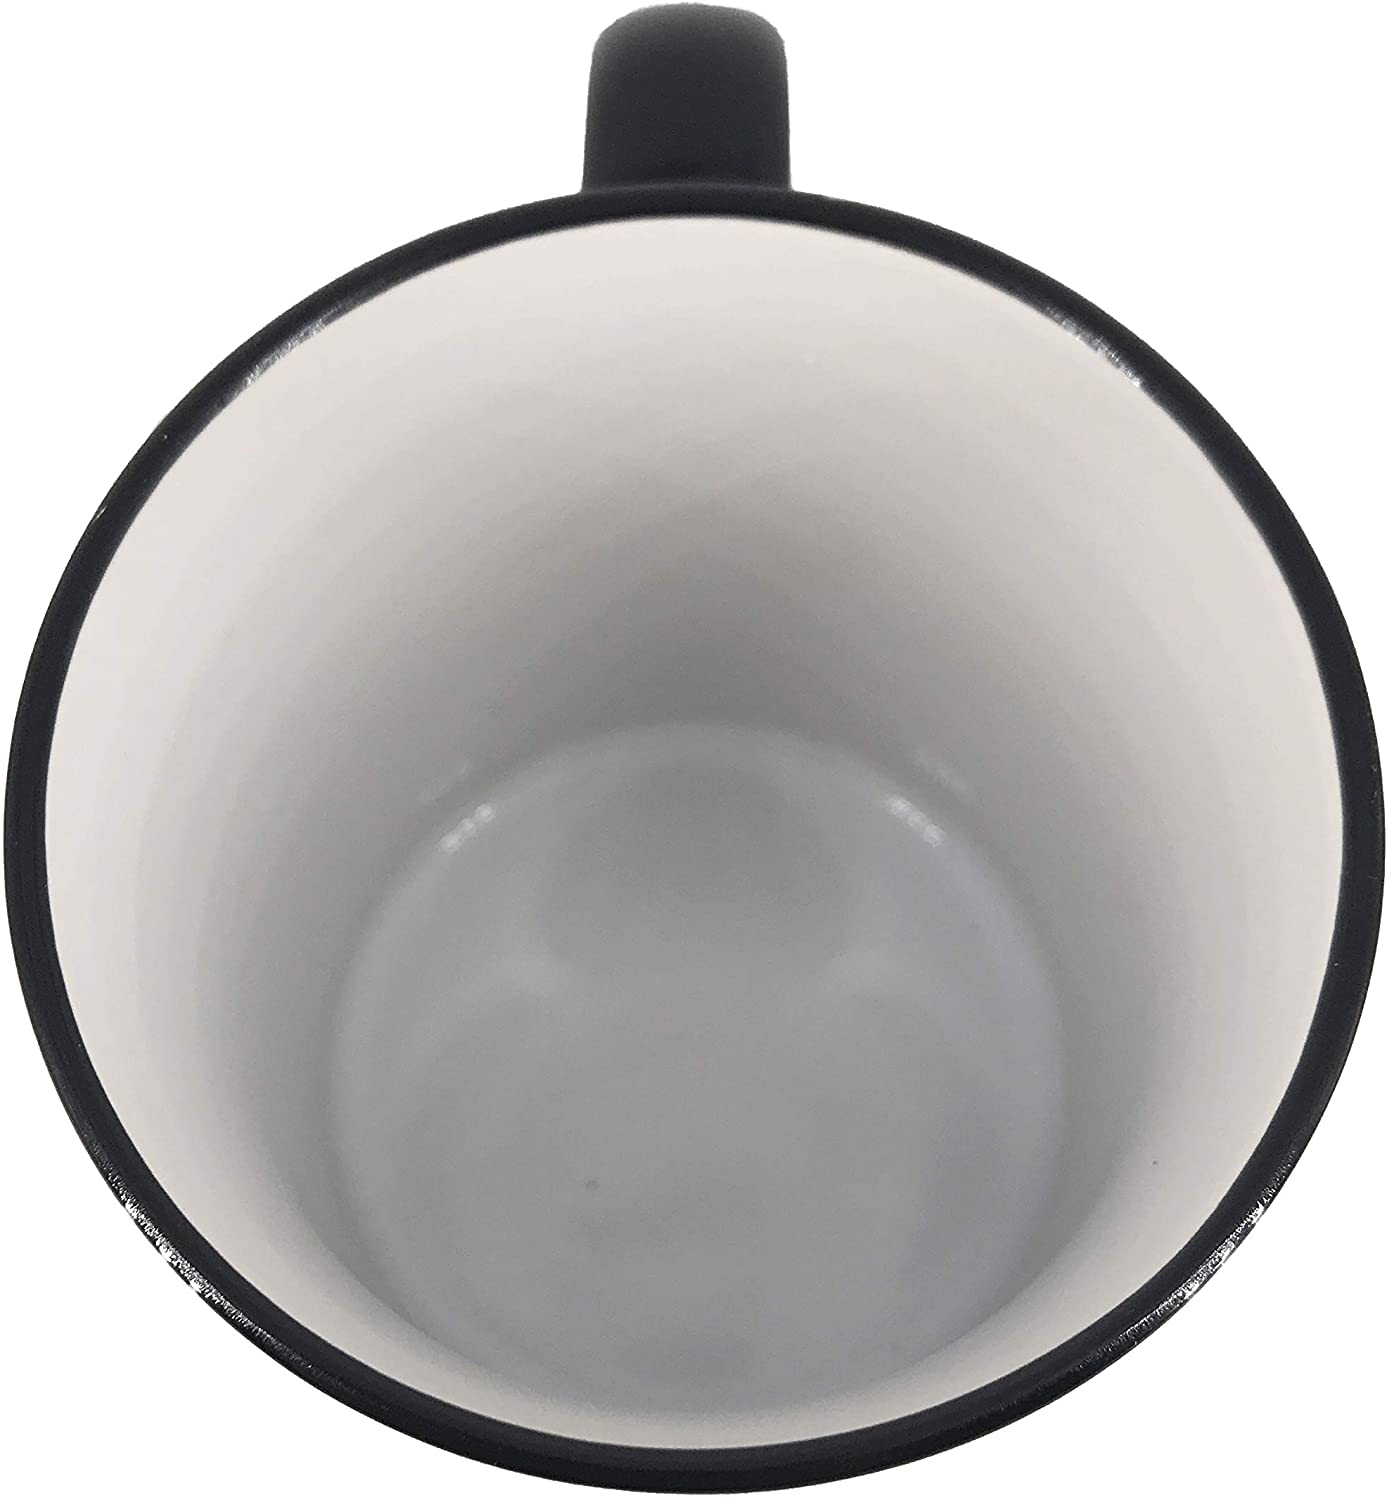 TM "I HAVE SPOKEN" White Ceramic Mug 4